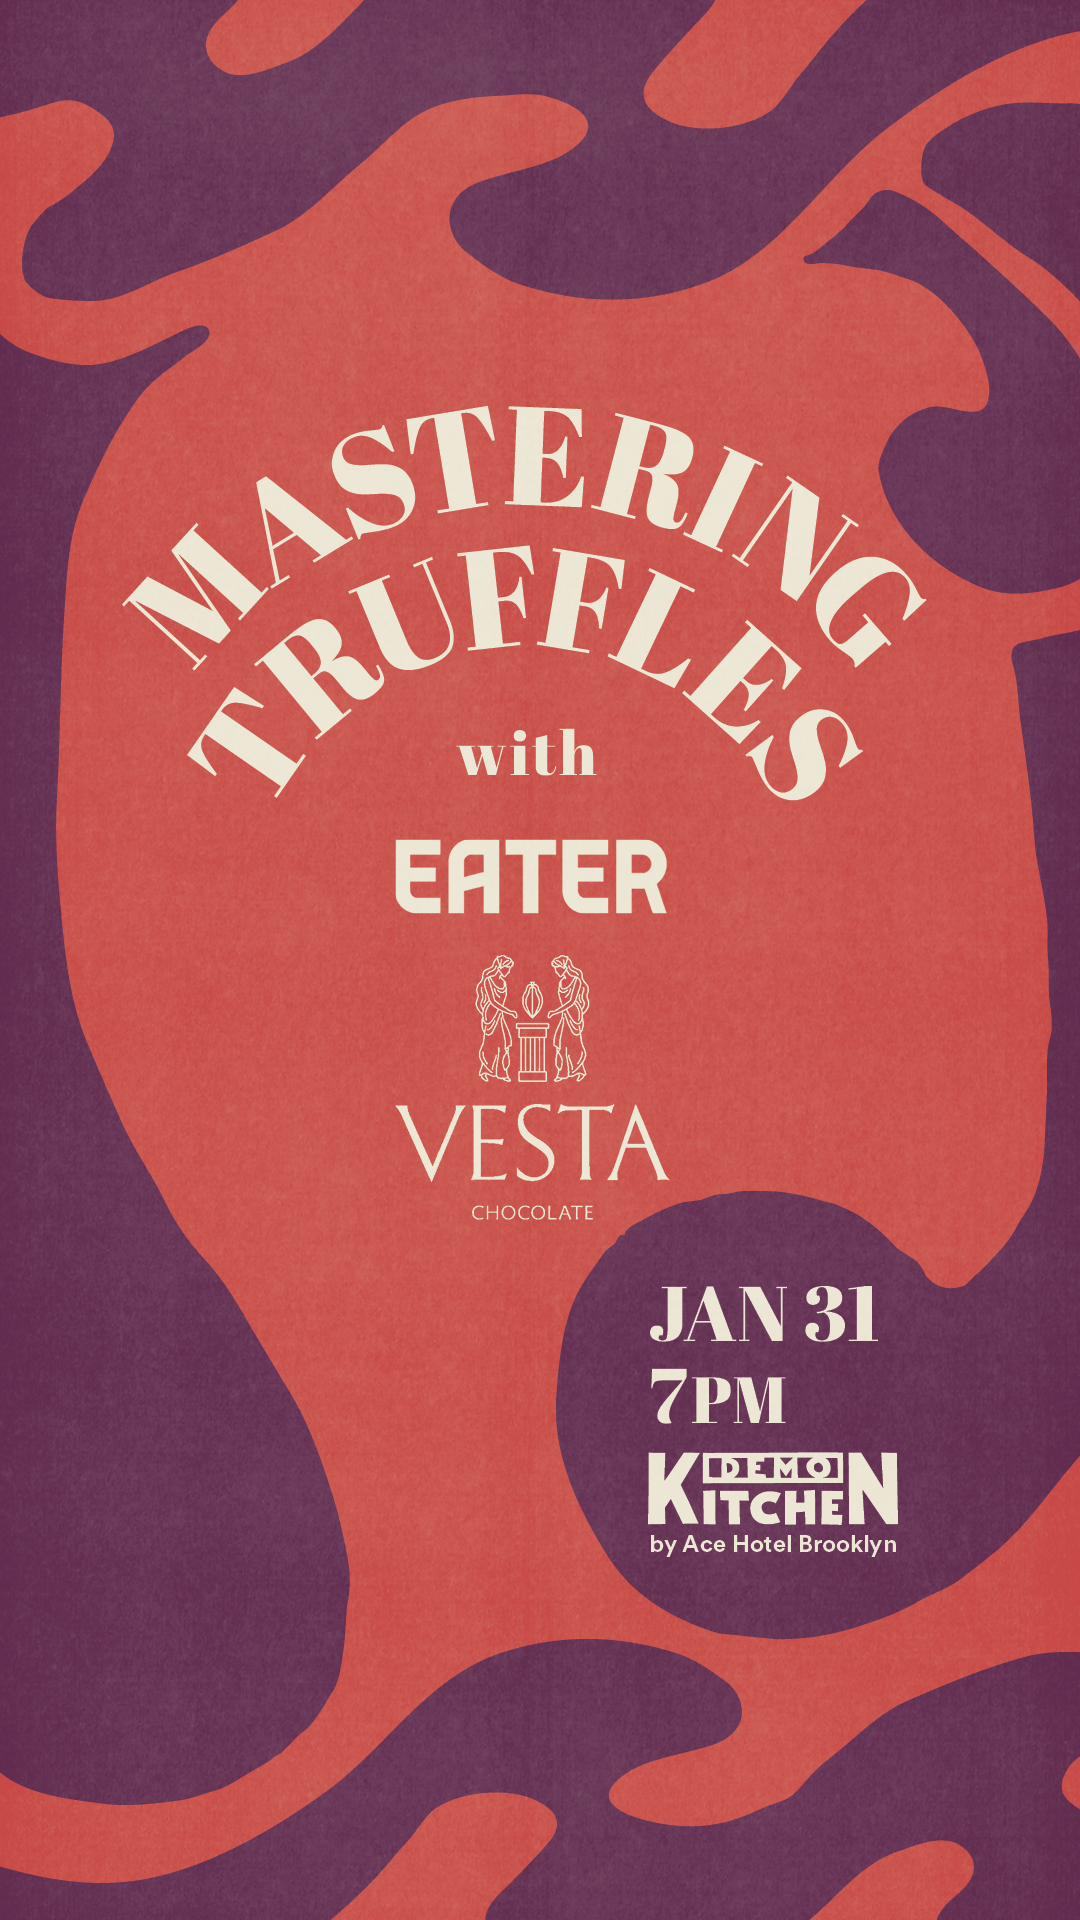 Mastering Truffles event flyer